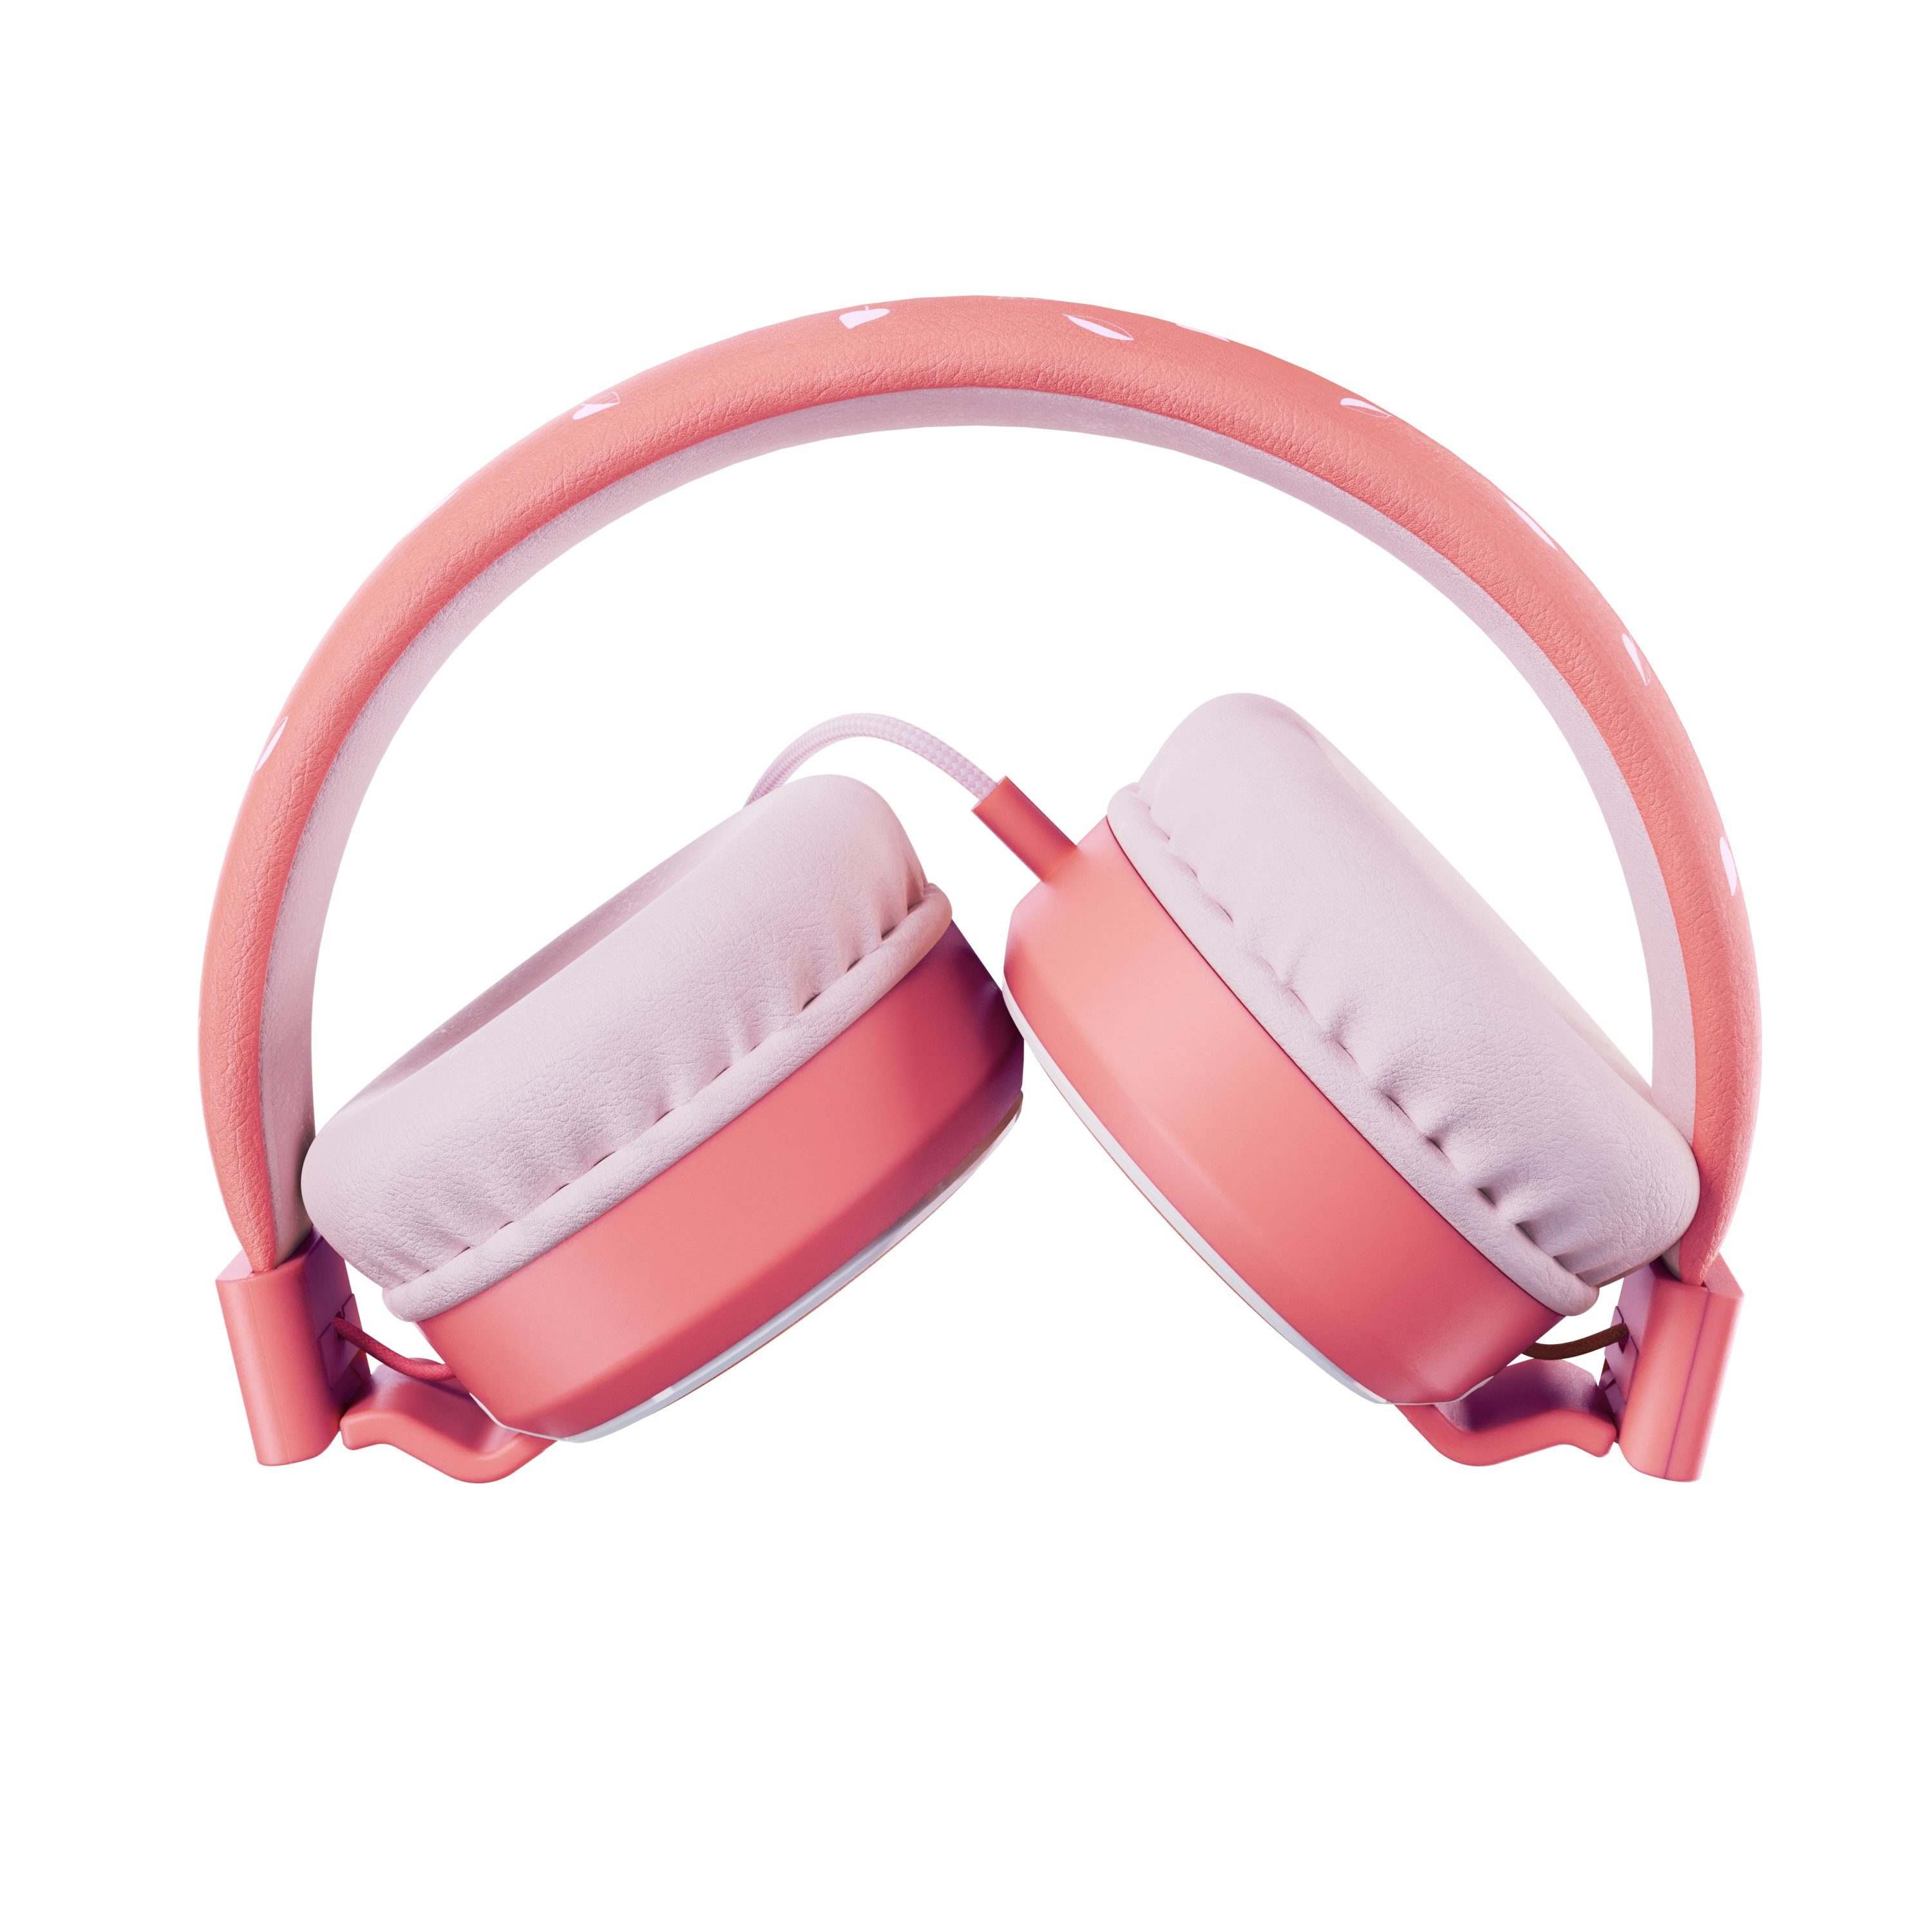 Planet Buddies Owl Wired Kinder-Kopfhörer Headphones